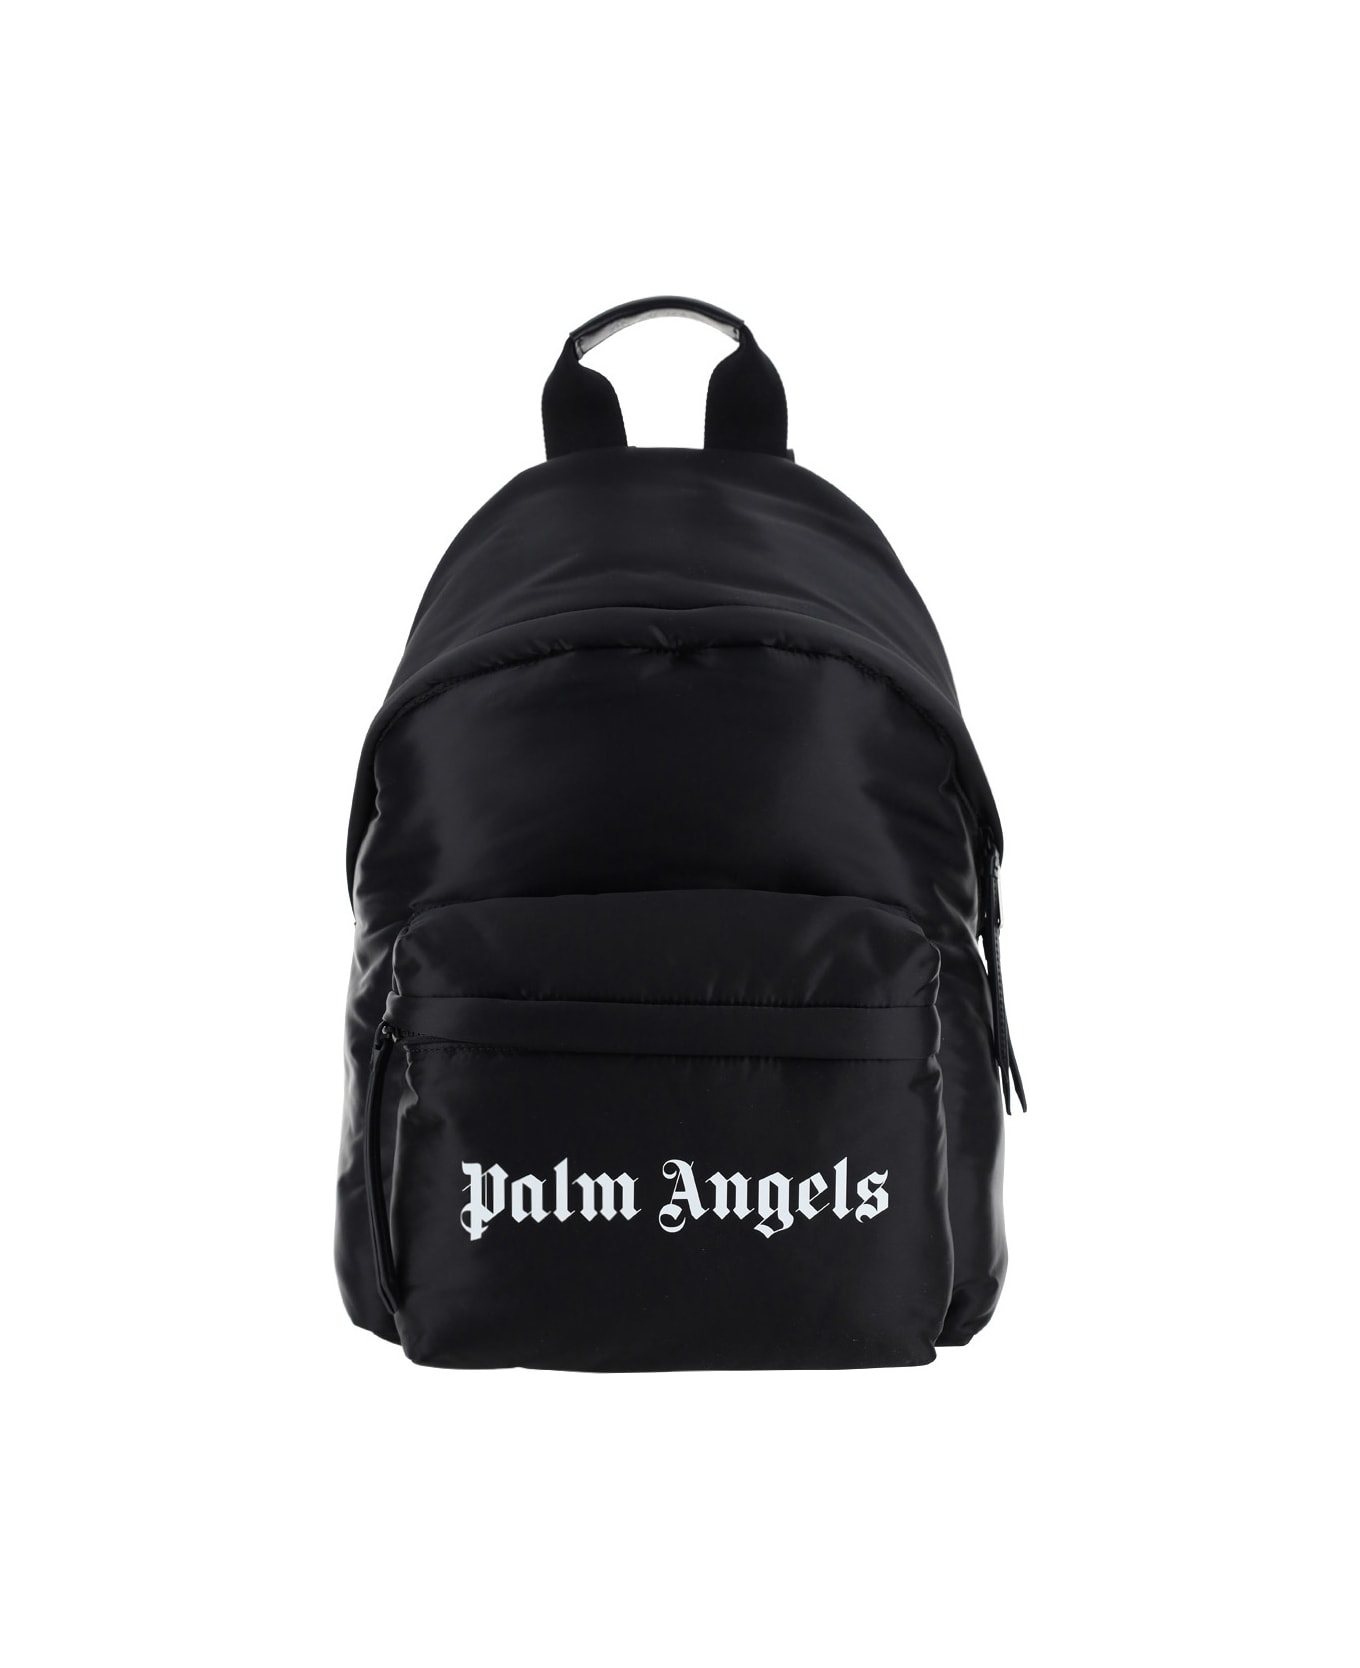 Palm Angels Backpack - Black/white